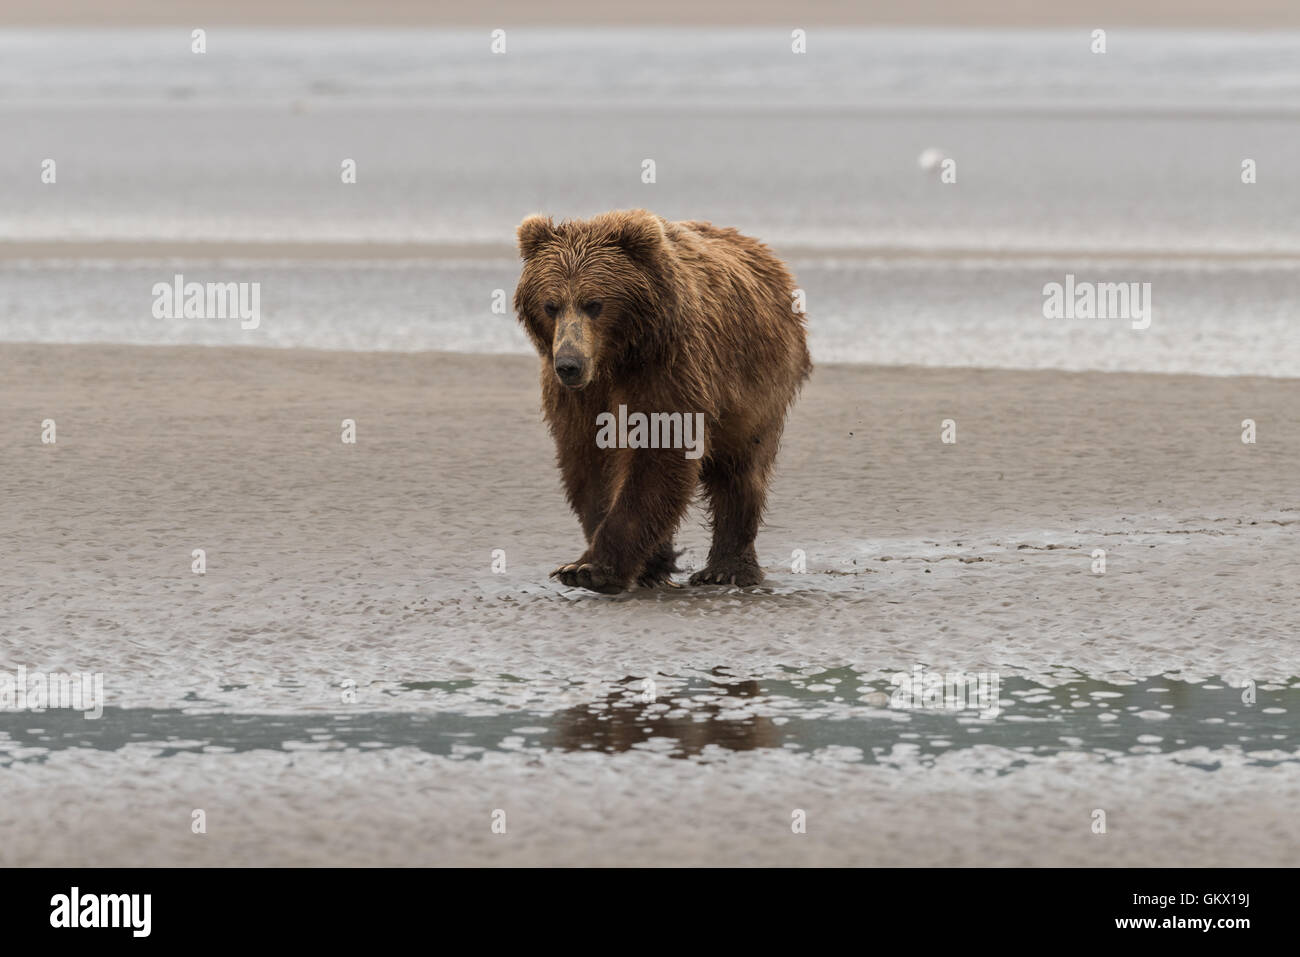 Alaskan brown bear walking on beach. Stock Photo